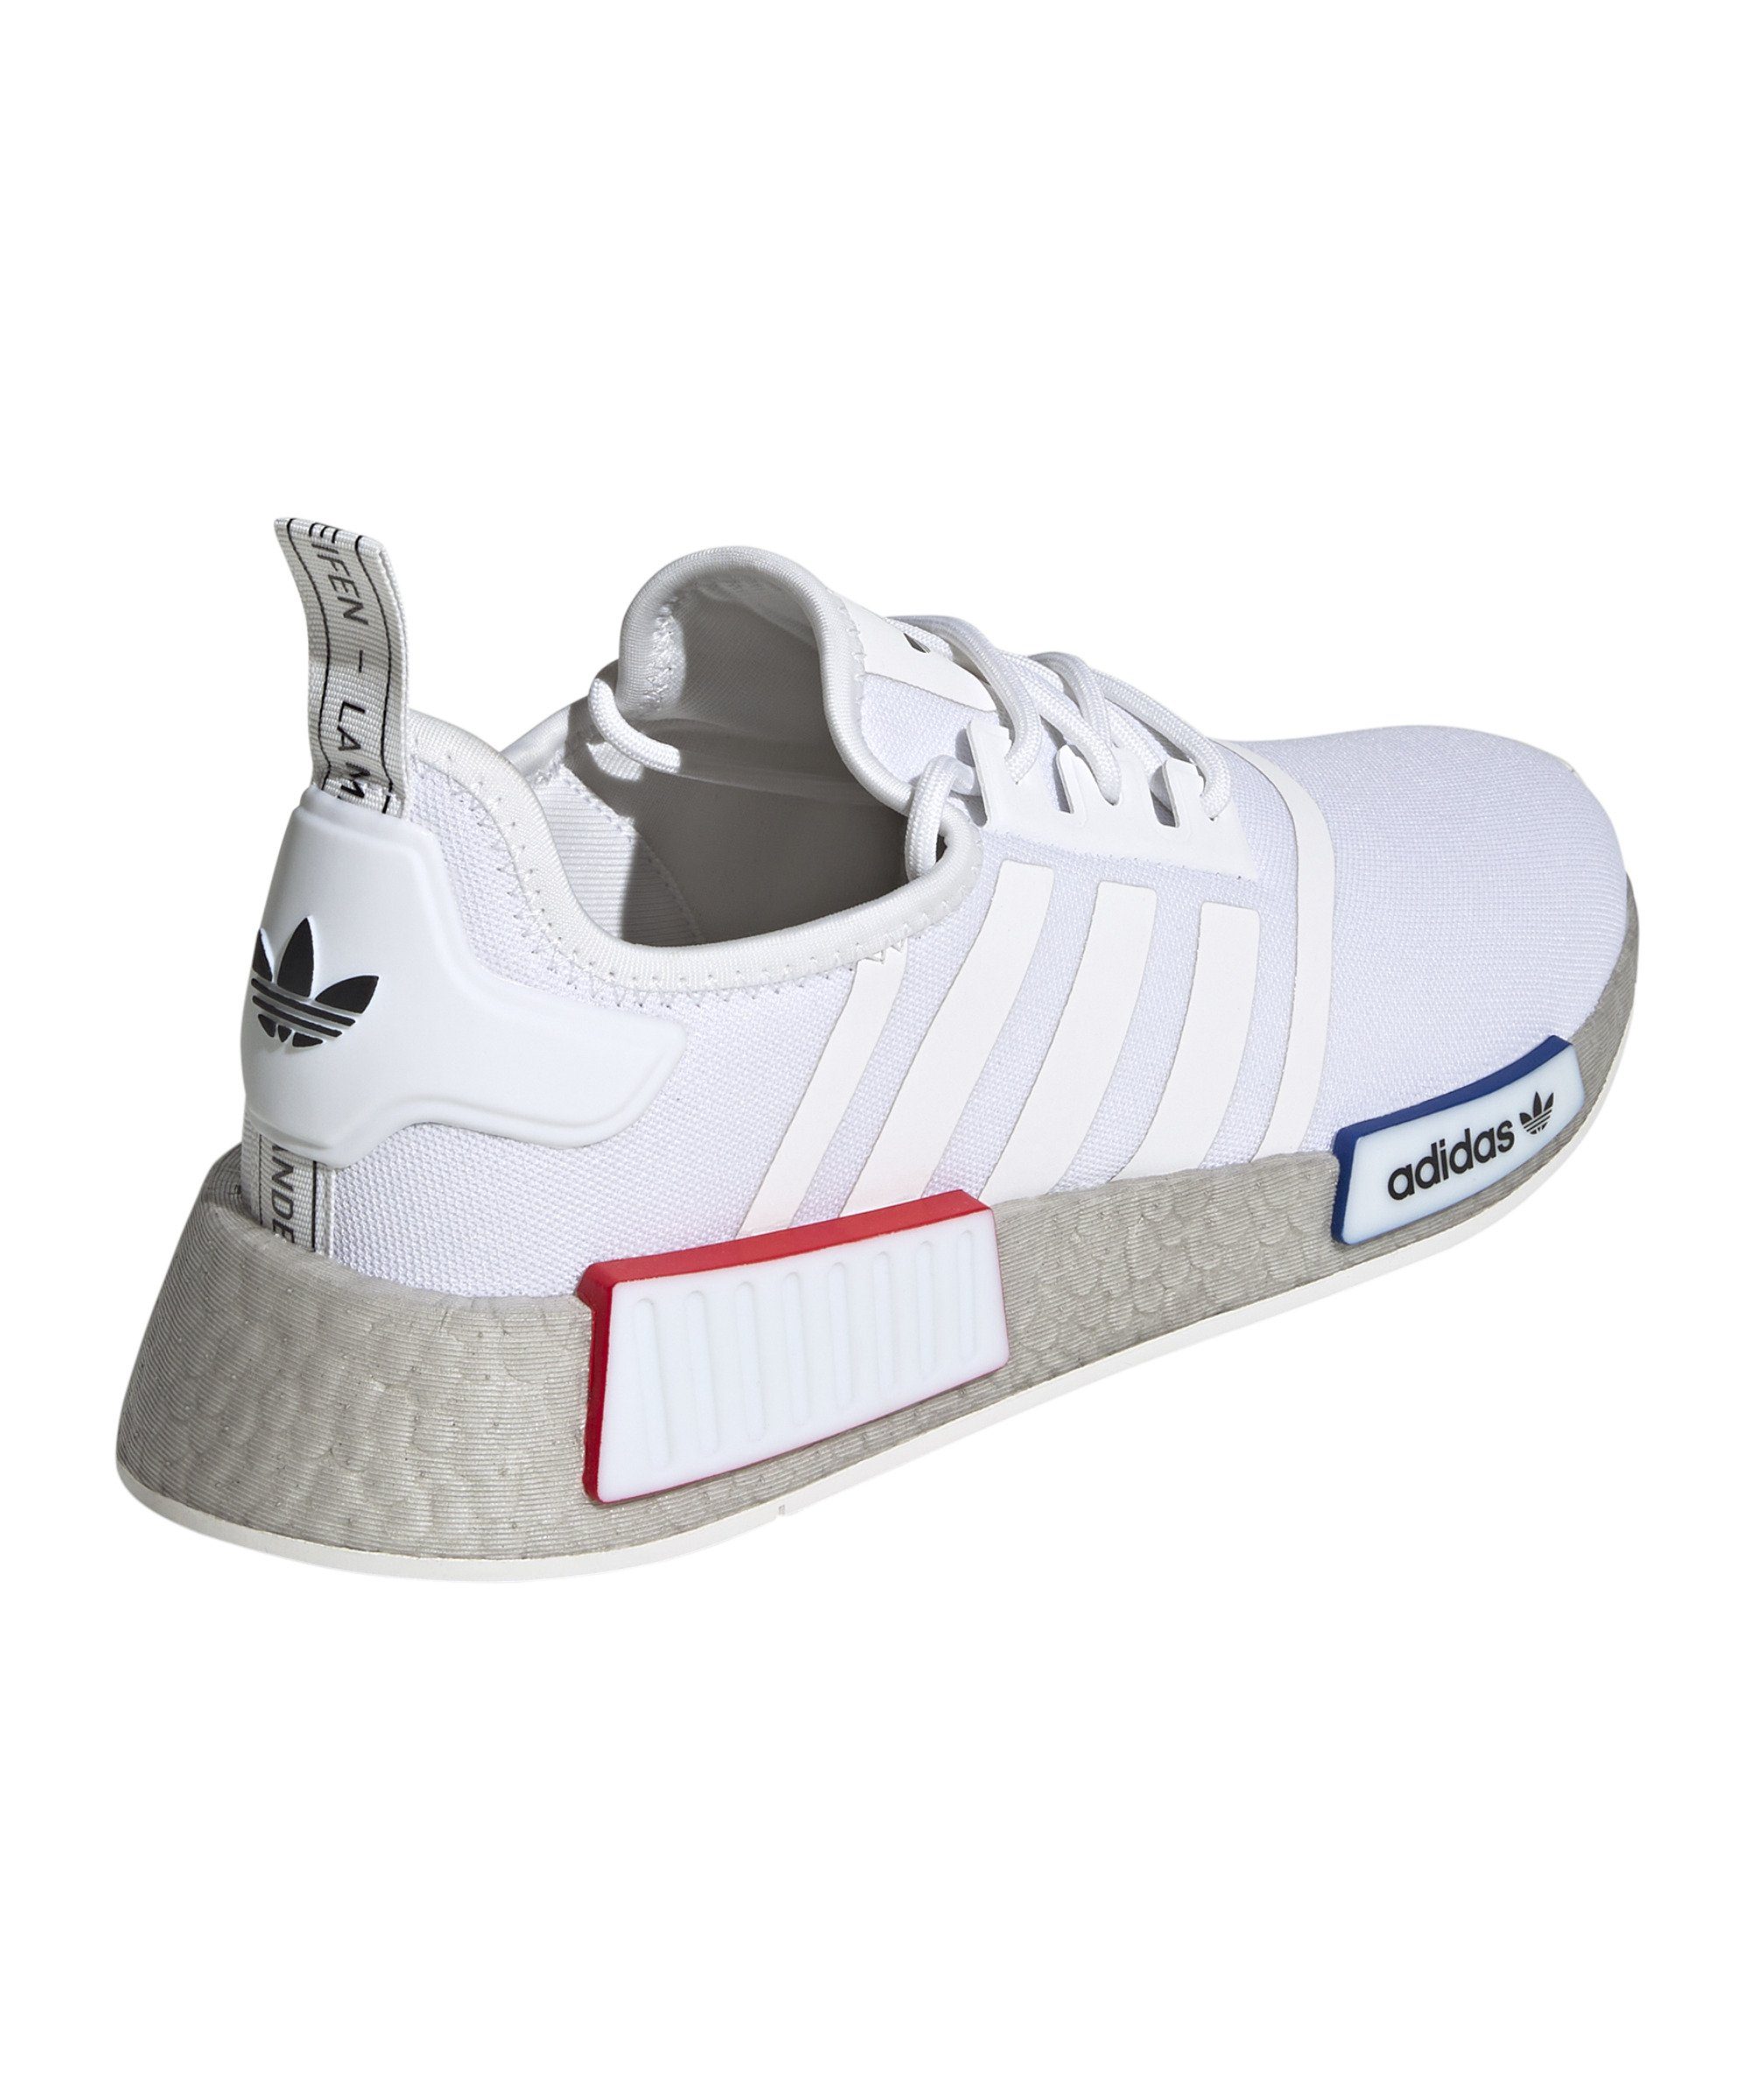 weissgrau NMD Originals adidas R1 Sneaker